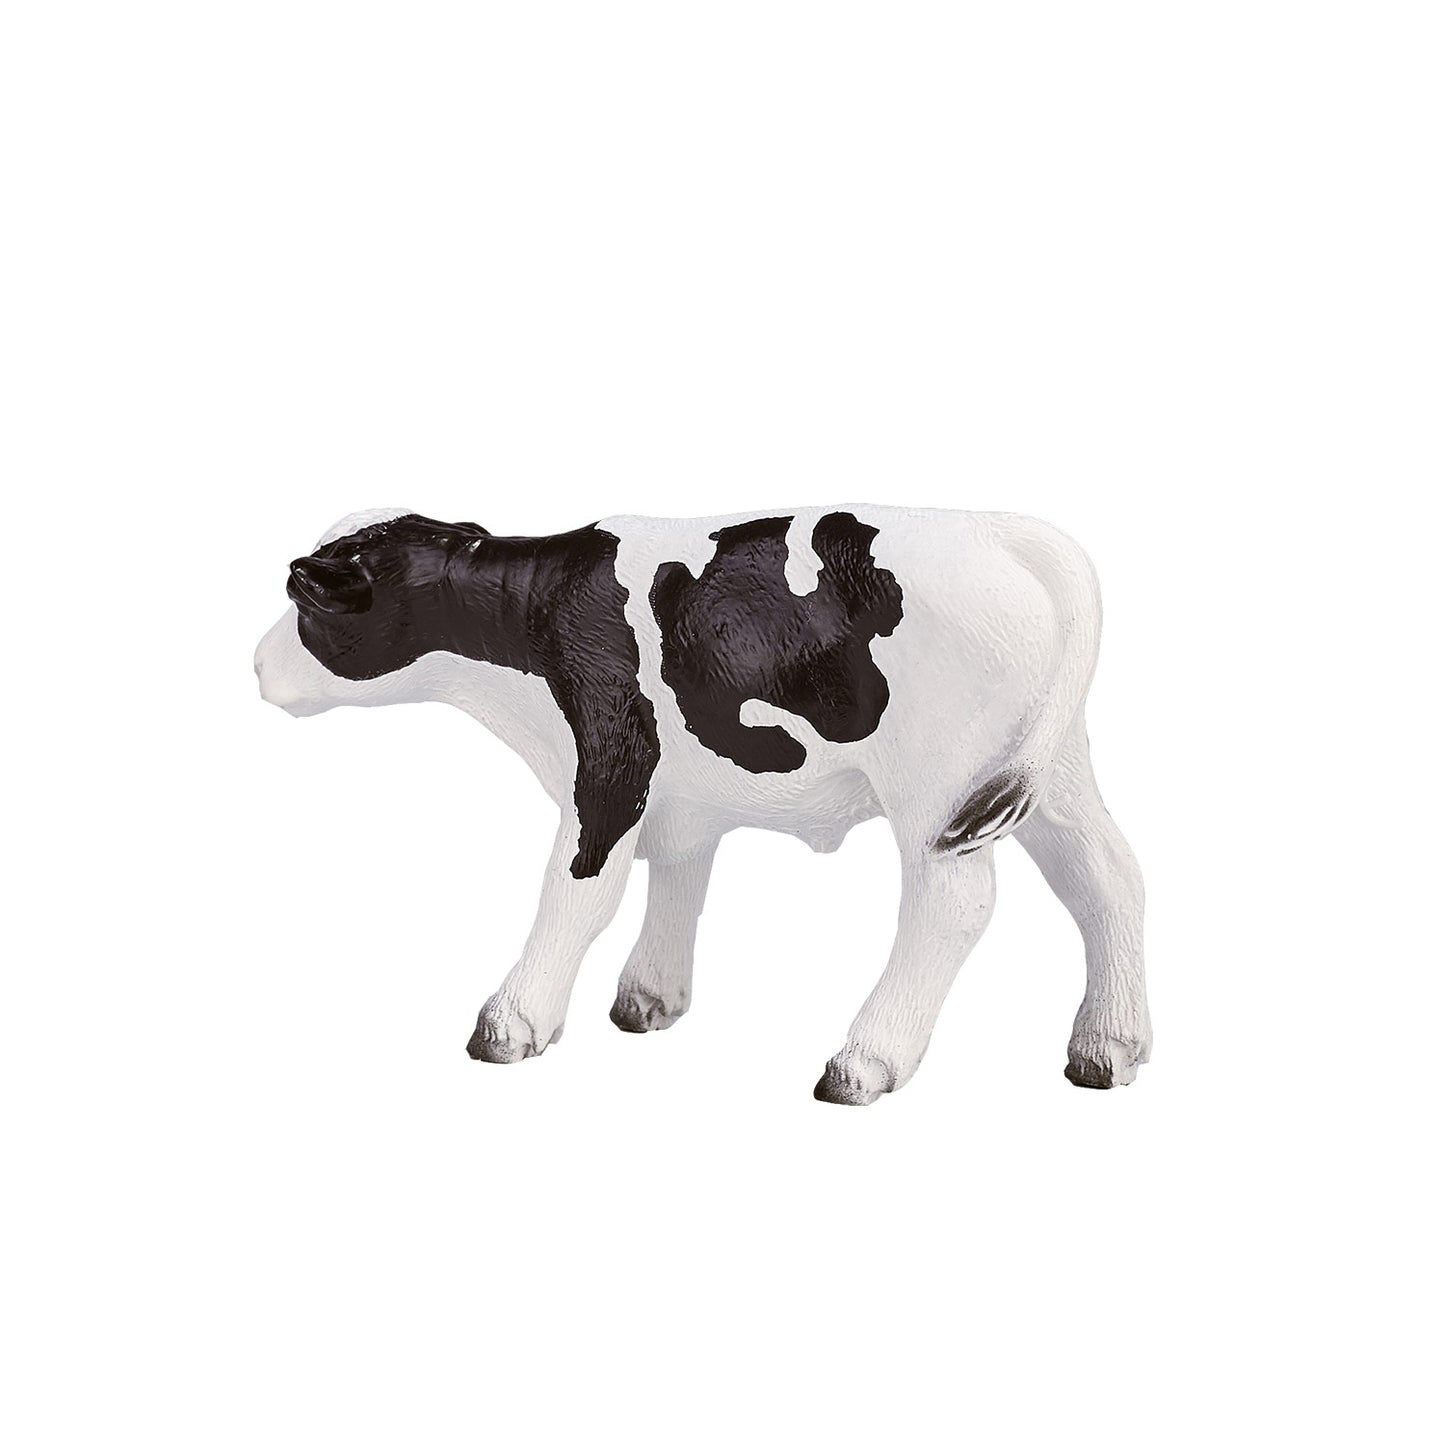 Mojo Farmland Holstein Kalf Staand 387061